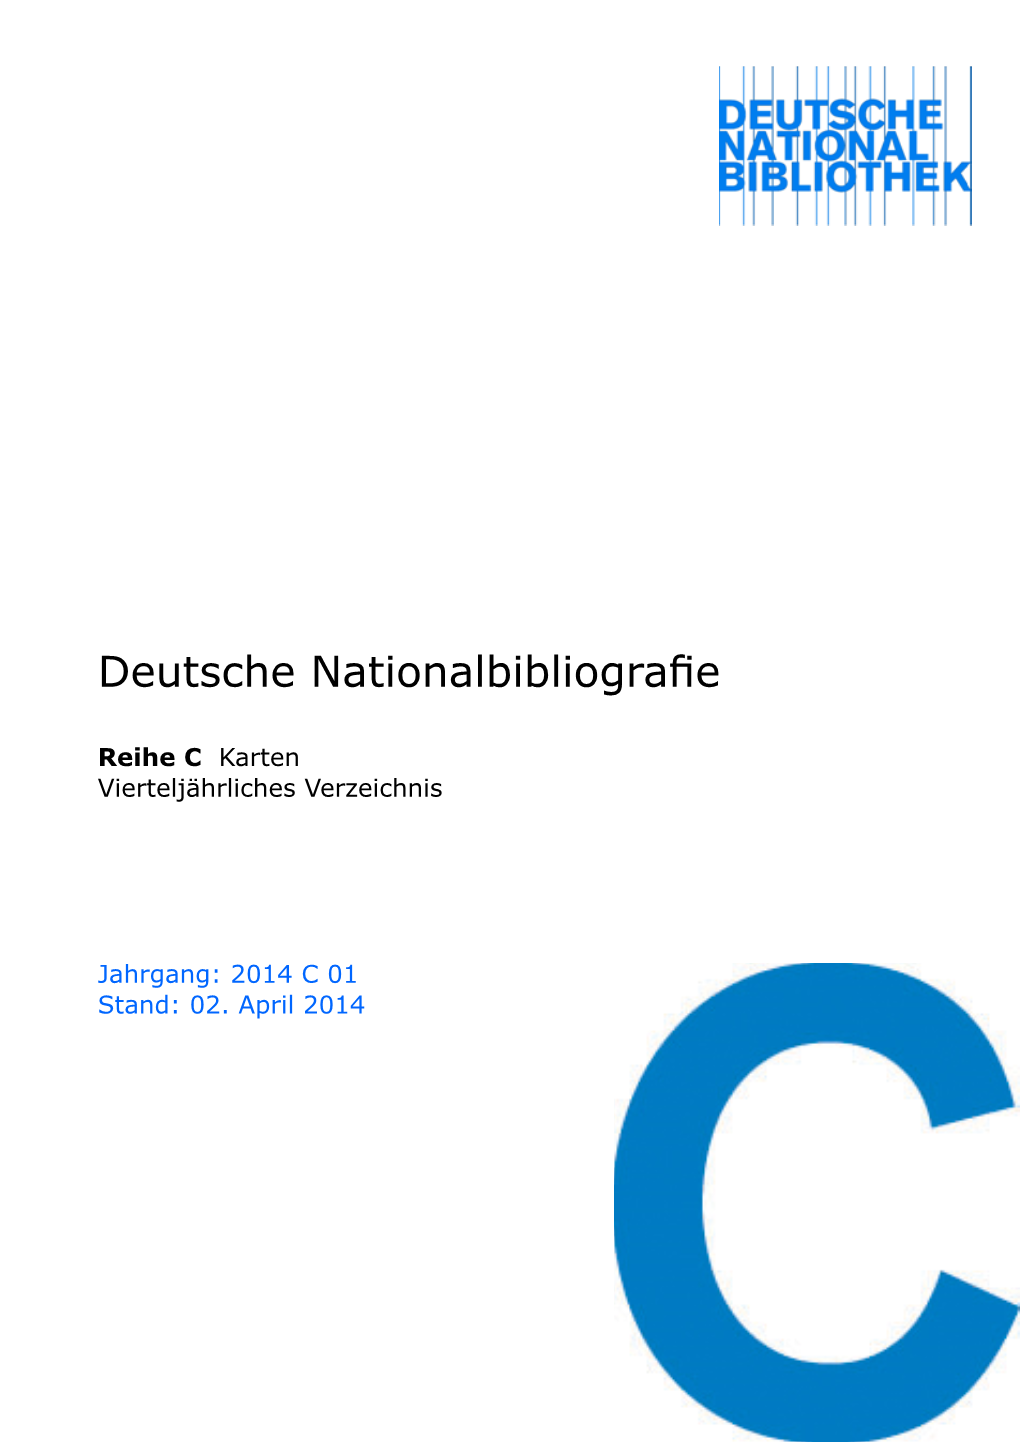 Deutsche Nationalbibliografie 2014 C 01